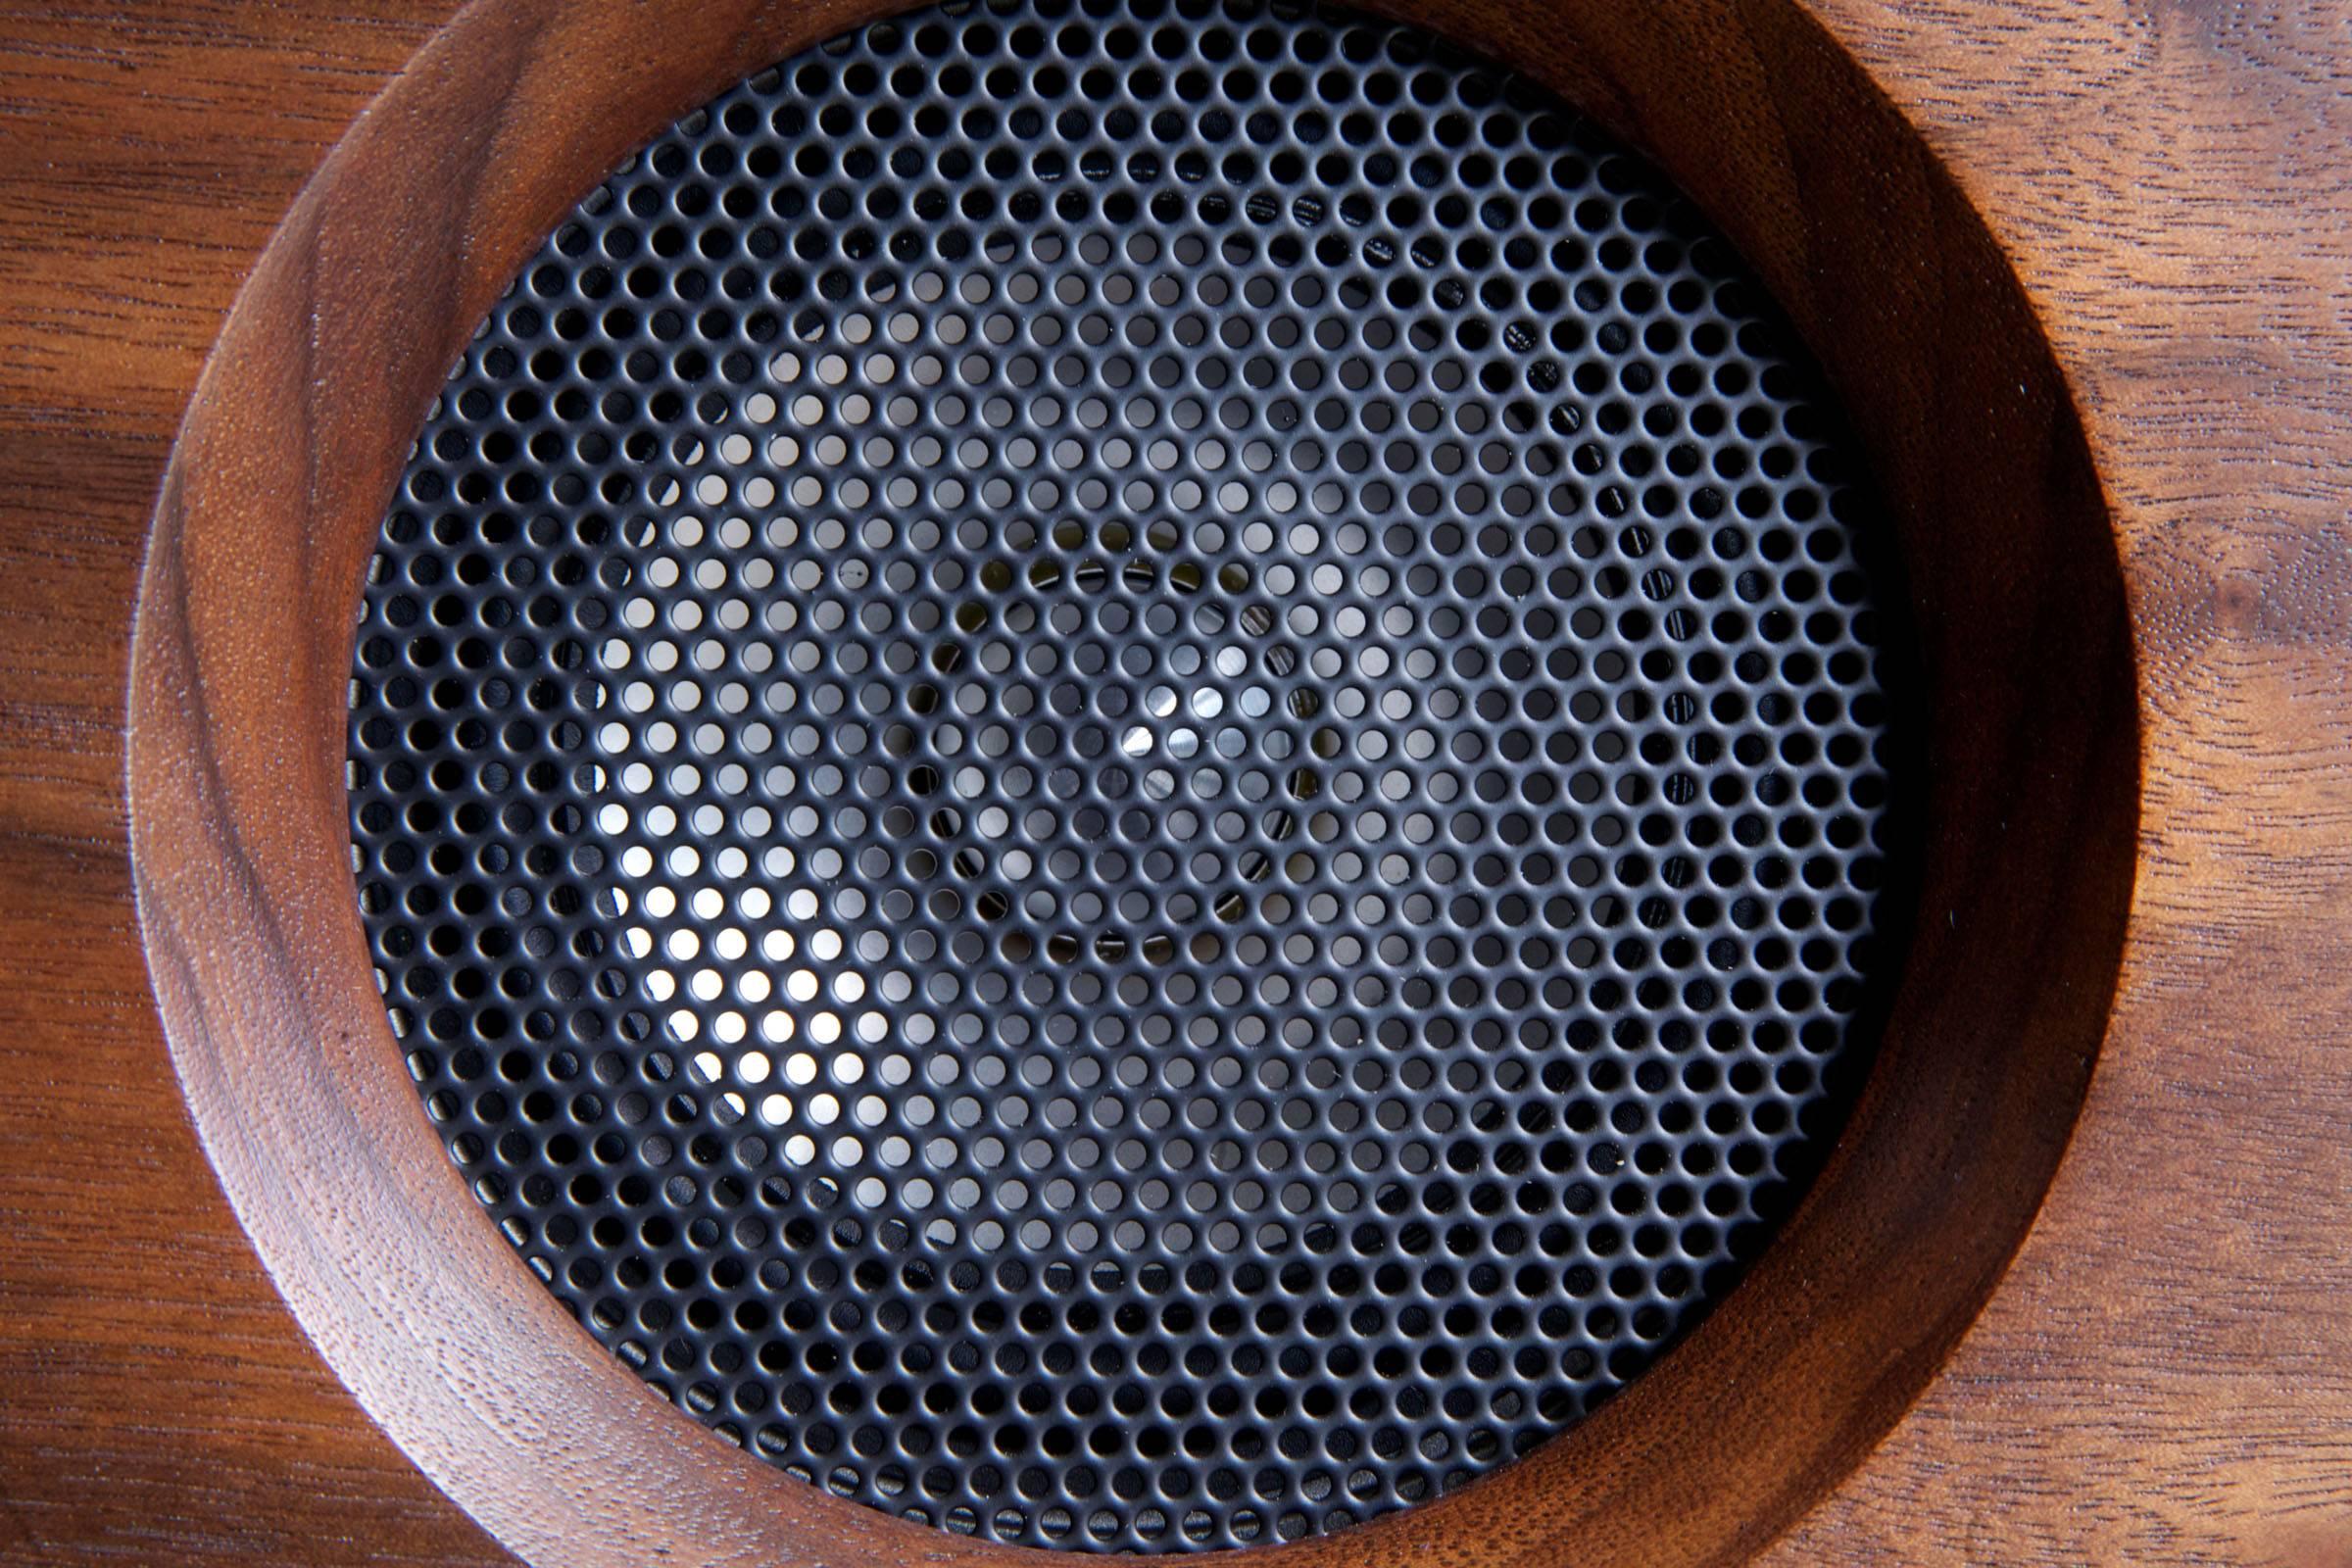 Tabletop HiFi Speaker Glacier White Cabinet with Natural Walnut Speaker Front 6